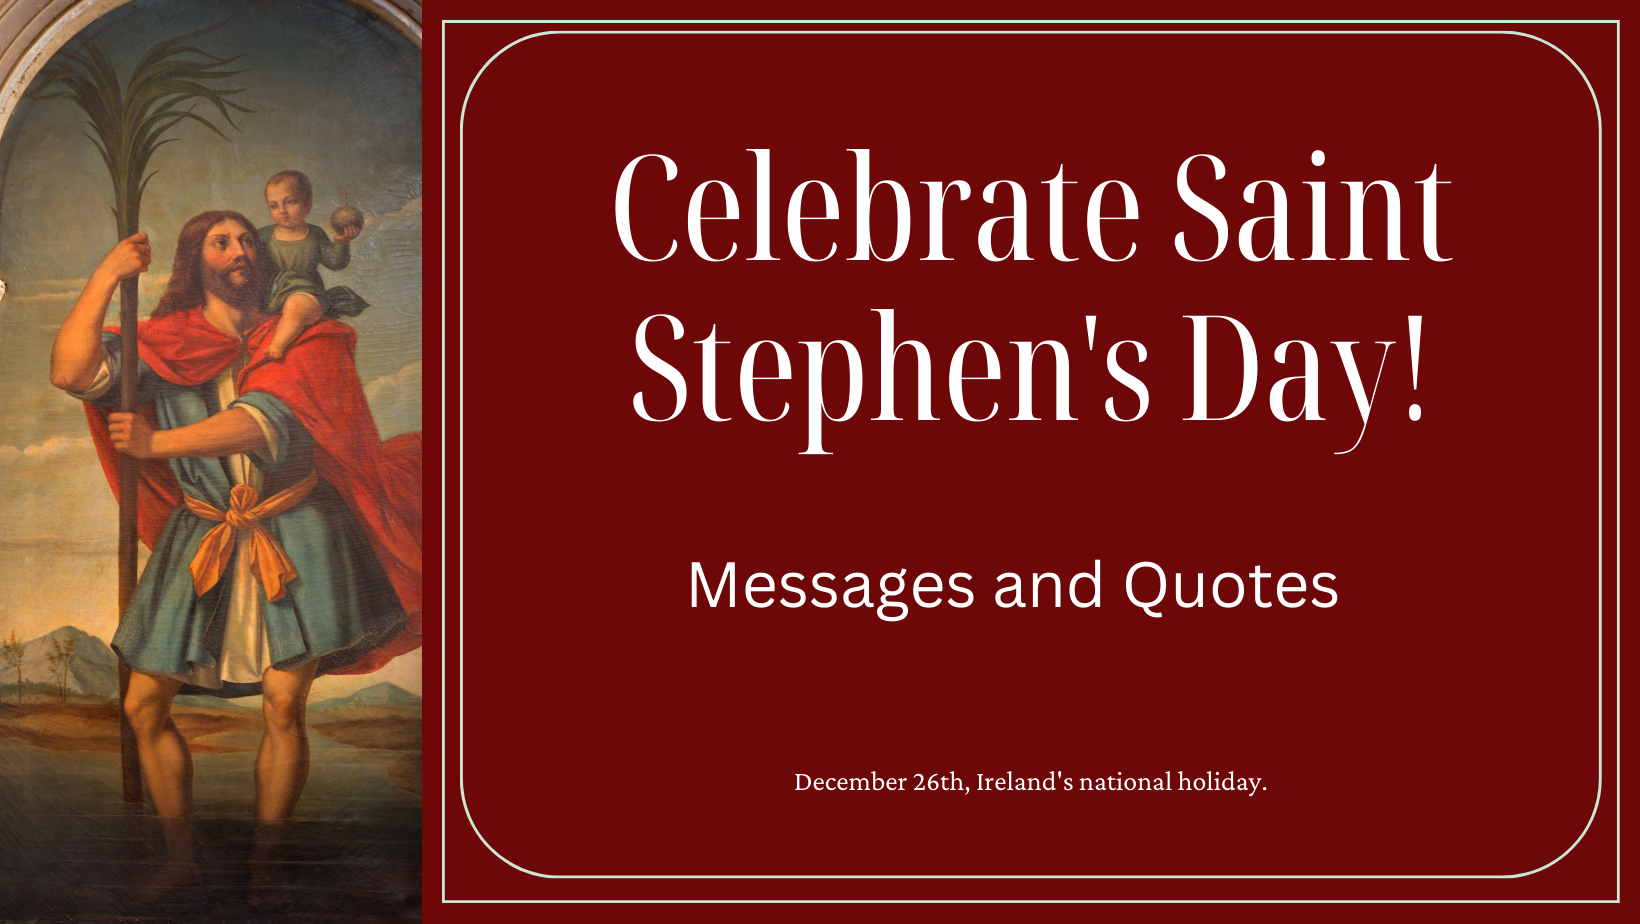 Saint Stephen's Day